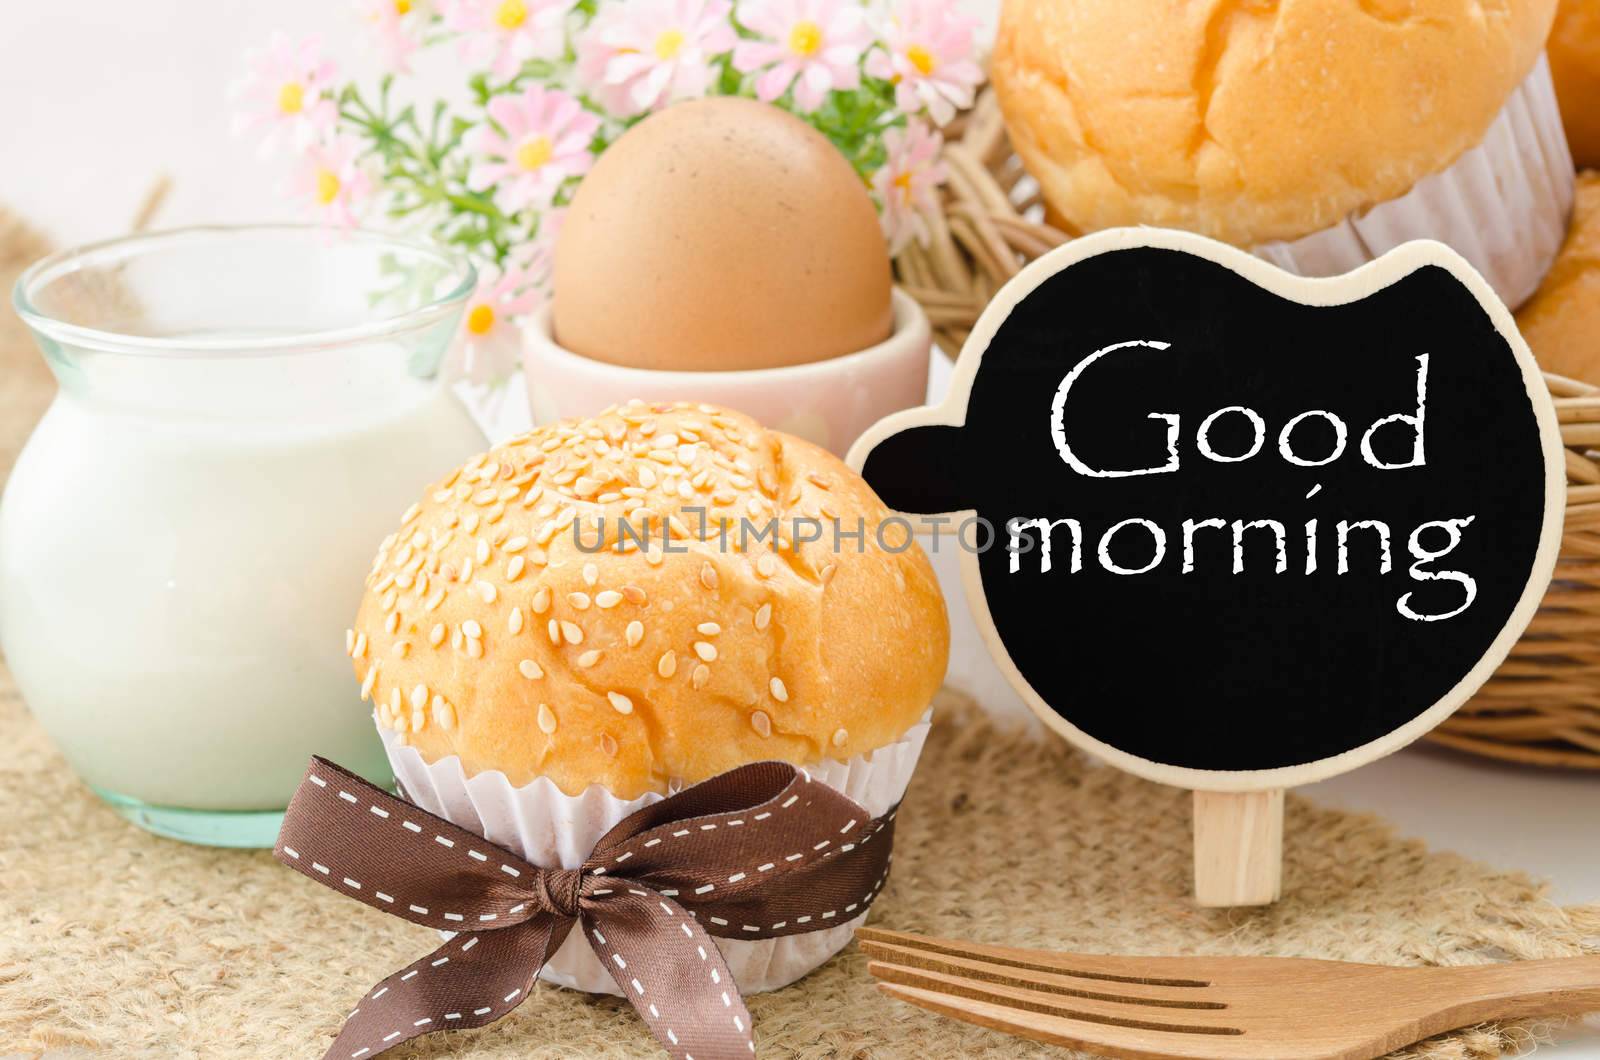 Good morning and breakfast, bread bun, milk, egg and blak tag.